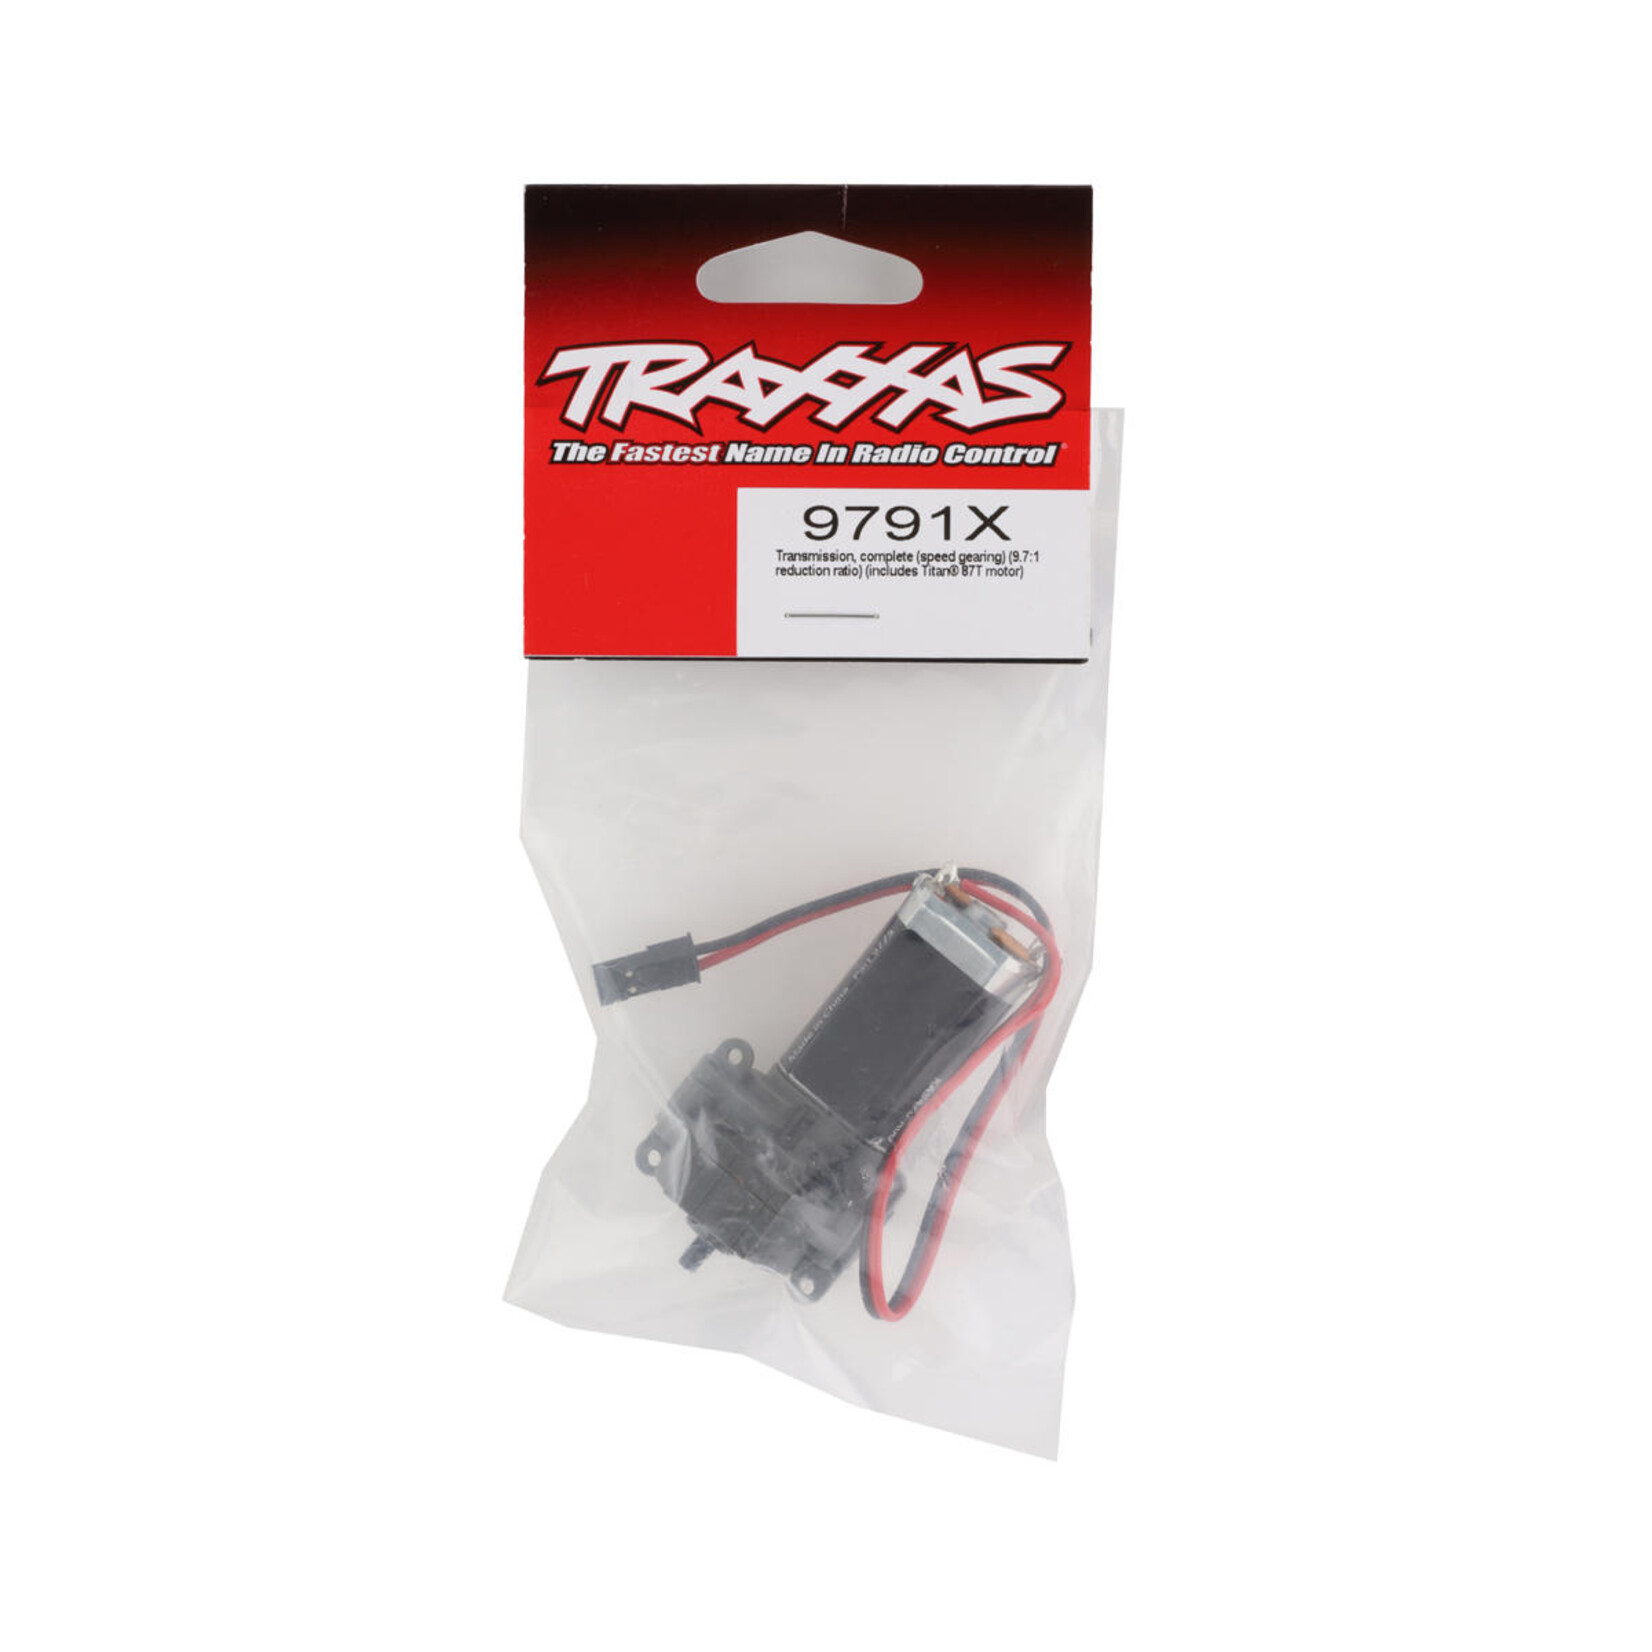 Traxxas Traxxas Complete Transmission w/87T Motor (Speed Gearing) (TRX-4M) #9791X